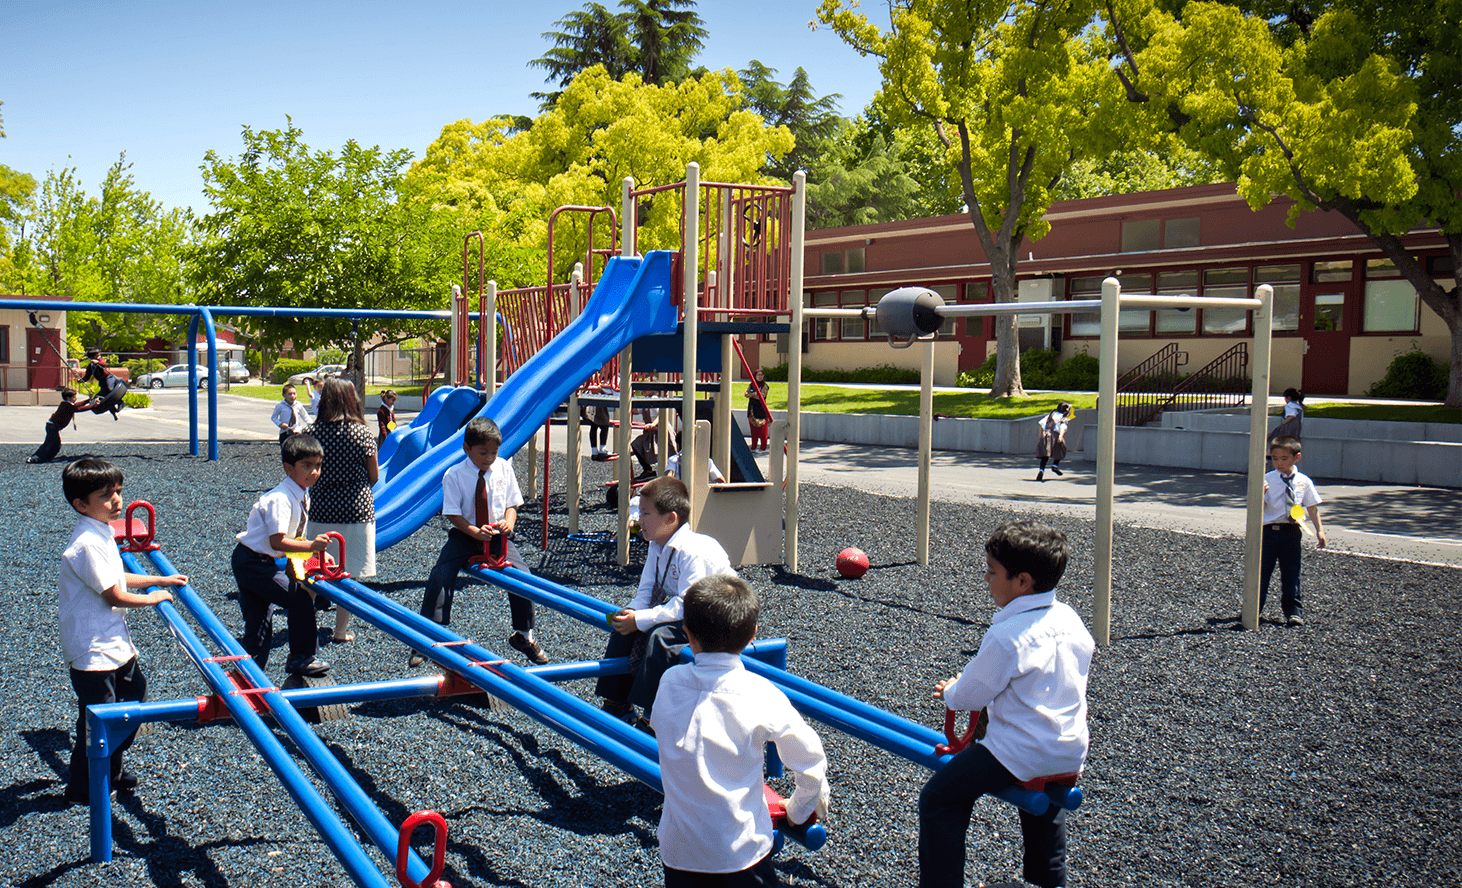 Playground Seesaw | Challenger School - Strawberry Park | Private School In San Jose, California